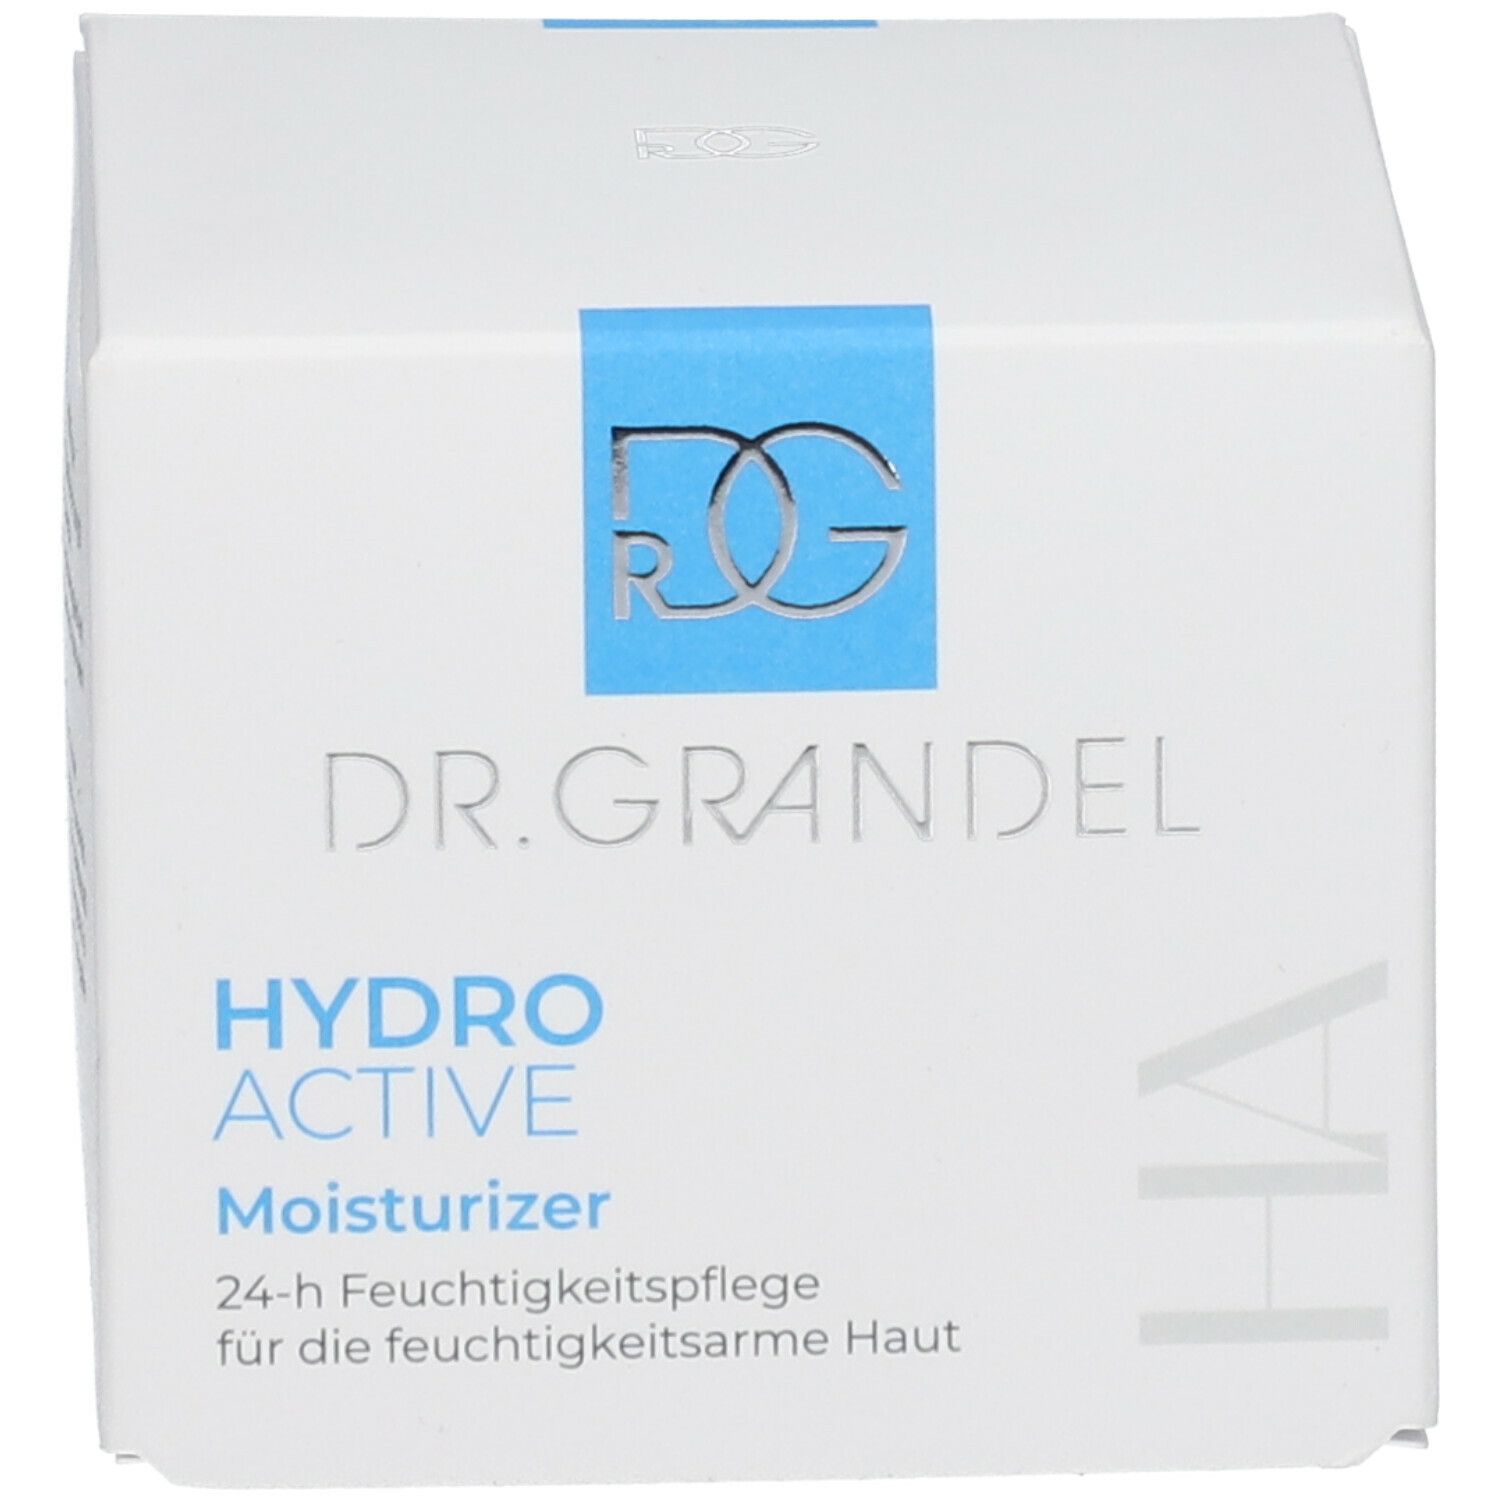 Dr Grandel Hydro Active Moisturizer Creme 50 Ml Shop Apothekeat 2797